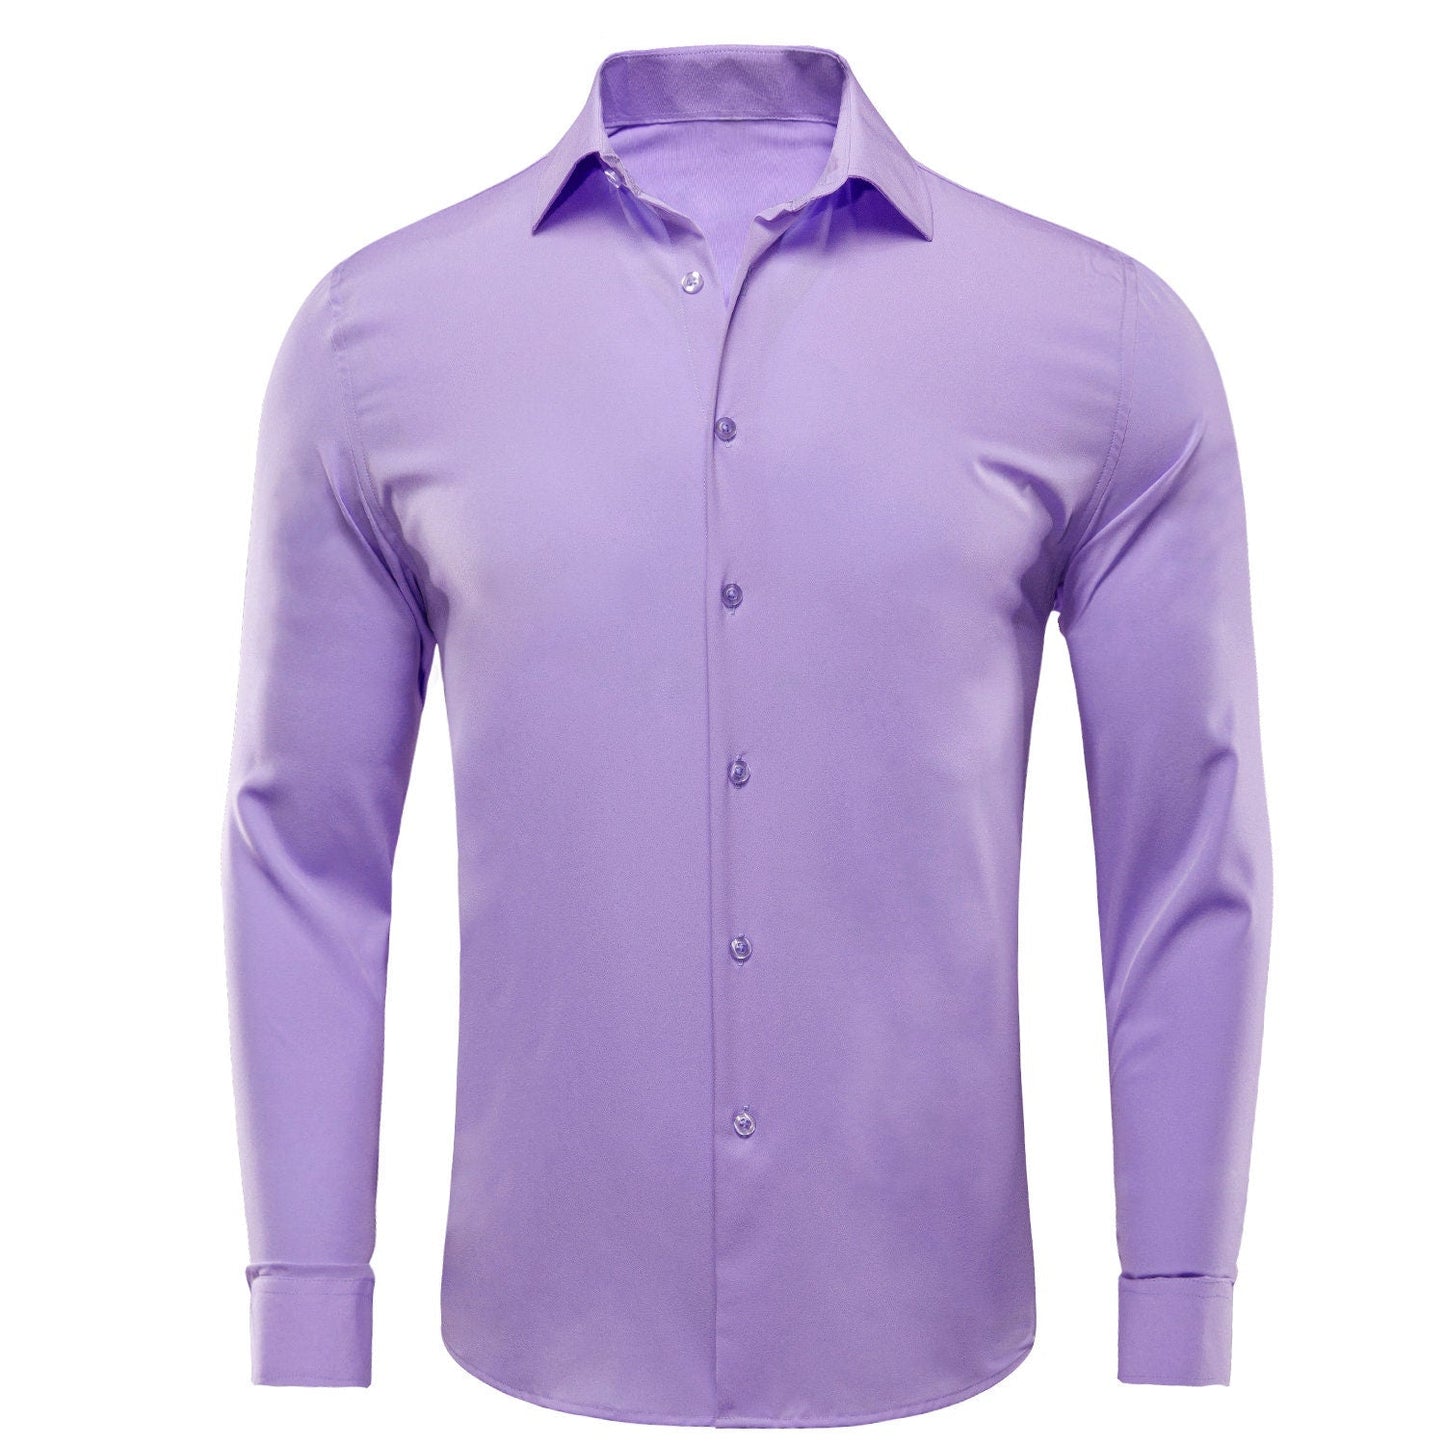 Men's 4-Way Stretch Dress Shirt Wrinkle-Free Long Sleeve Light Blue